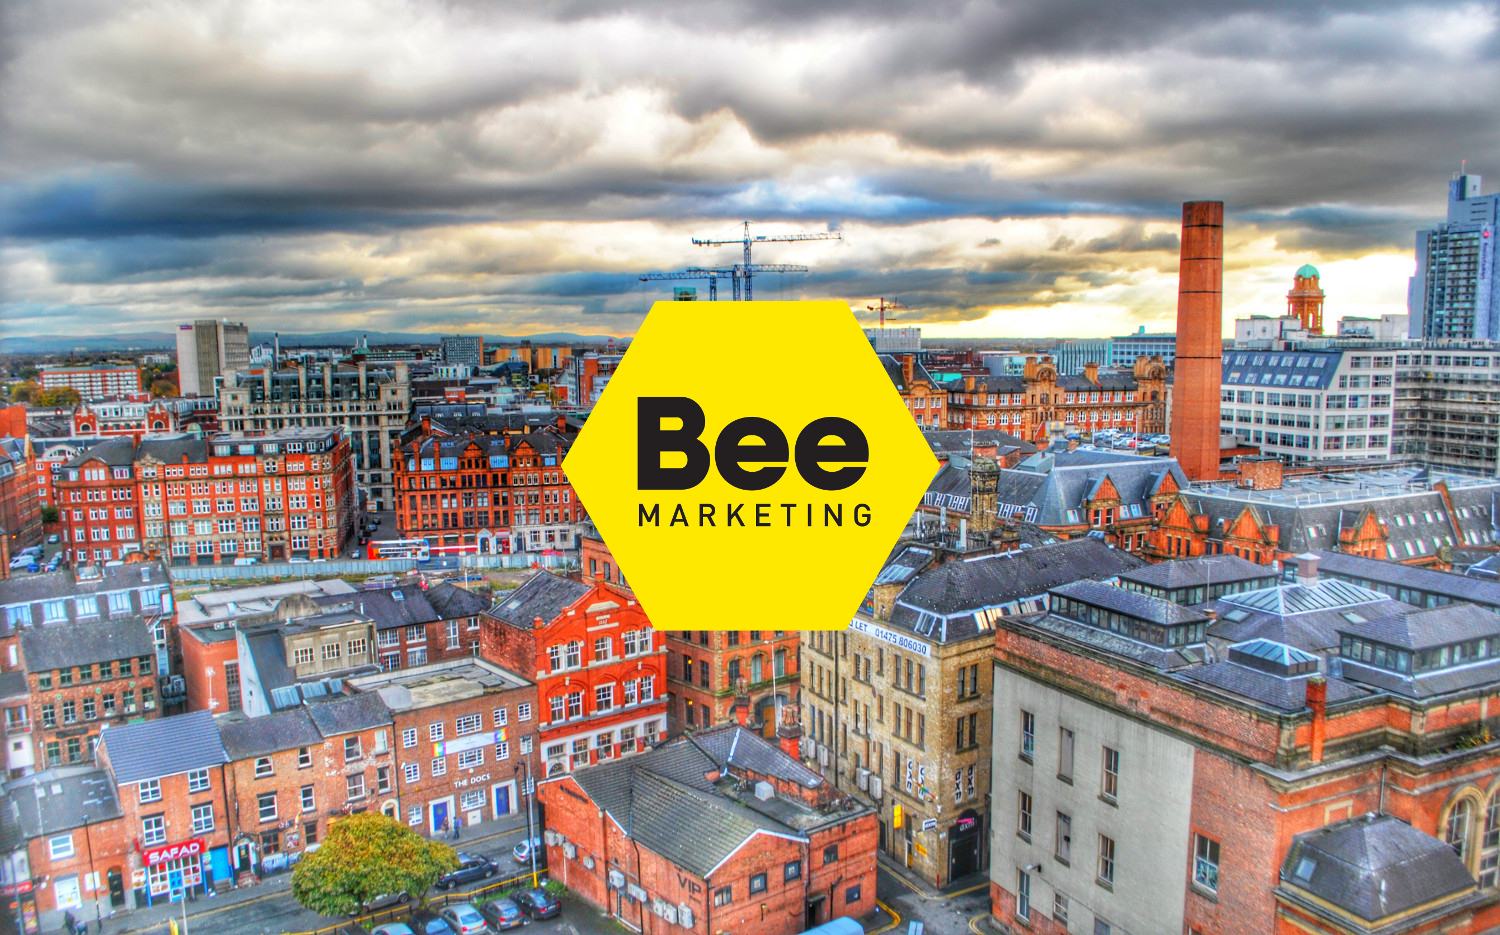 (c) Beemarketing.co.uk